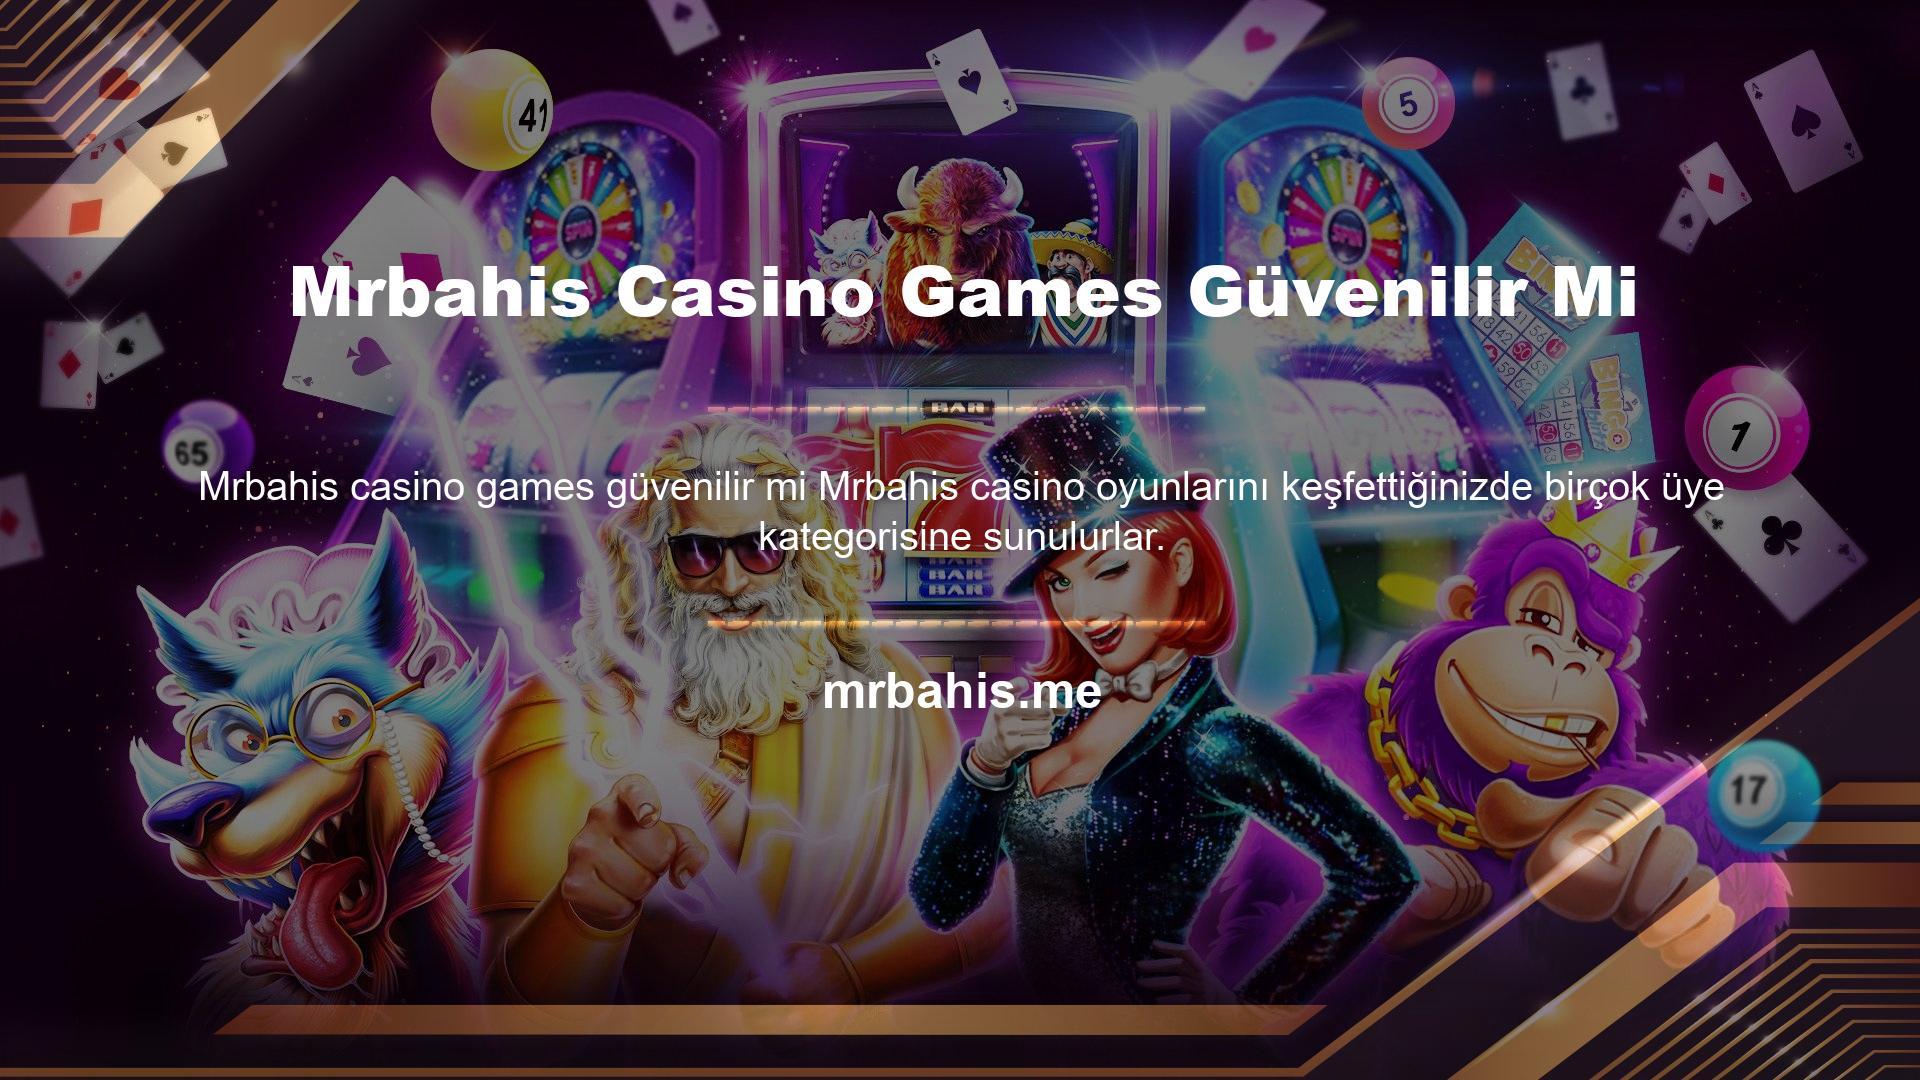 Mrbahis Casino Games Güvenilir Mi